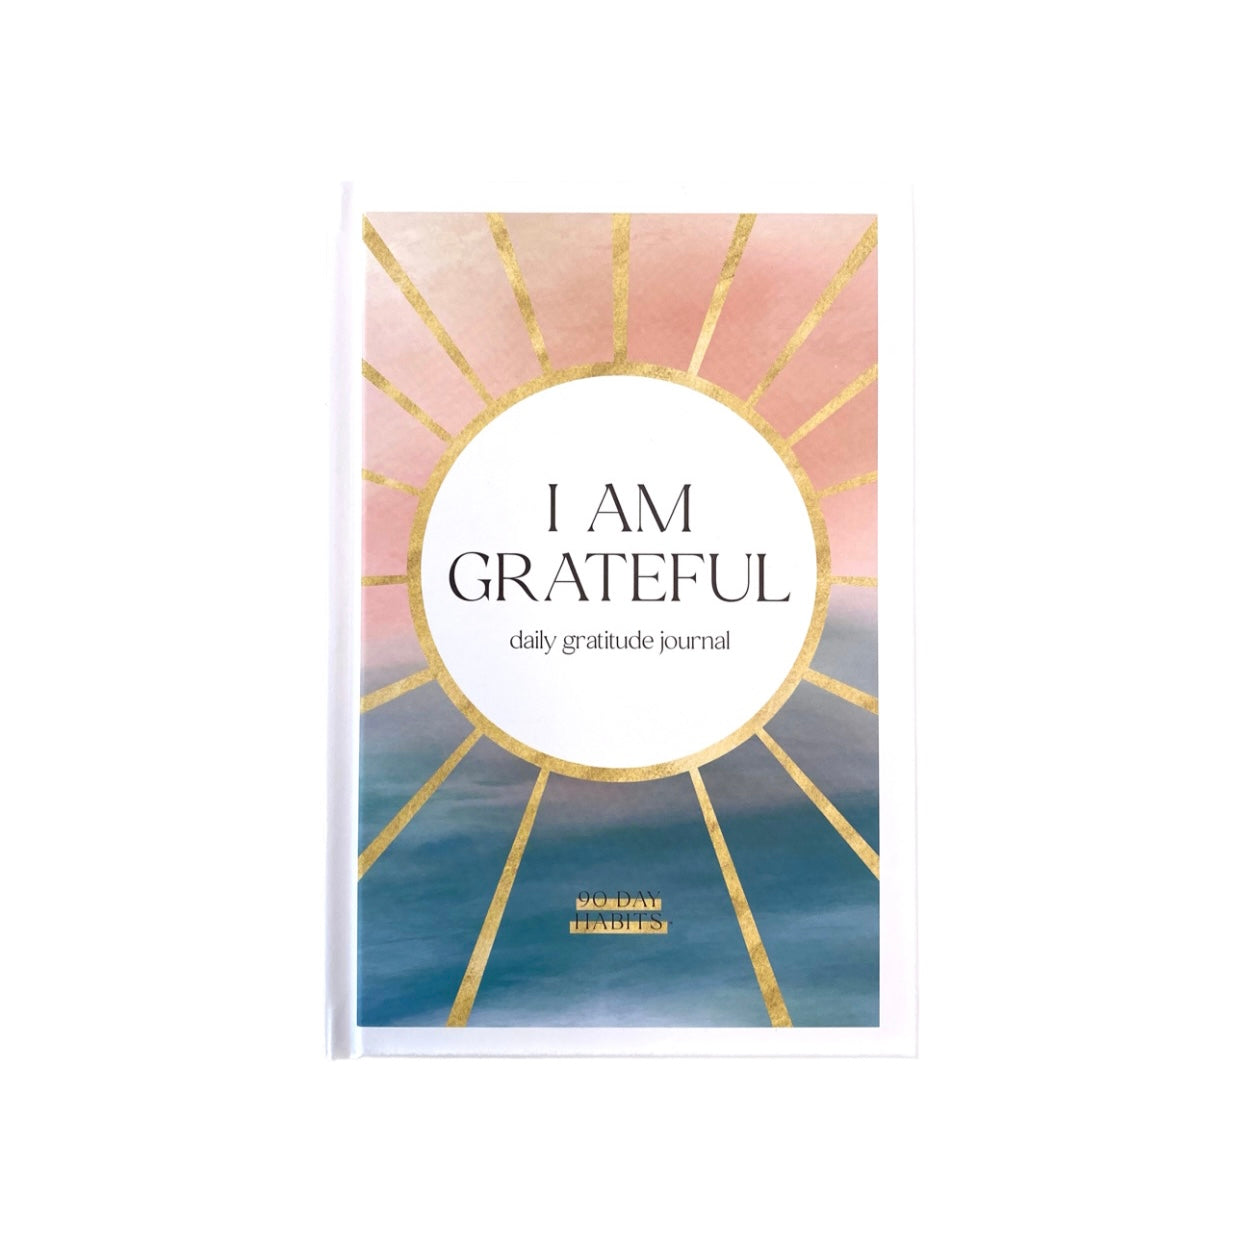 Gratitude Journal – 90 Days Habits